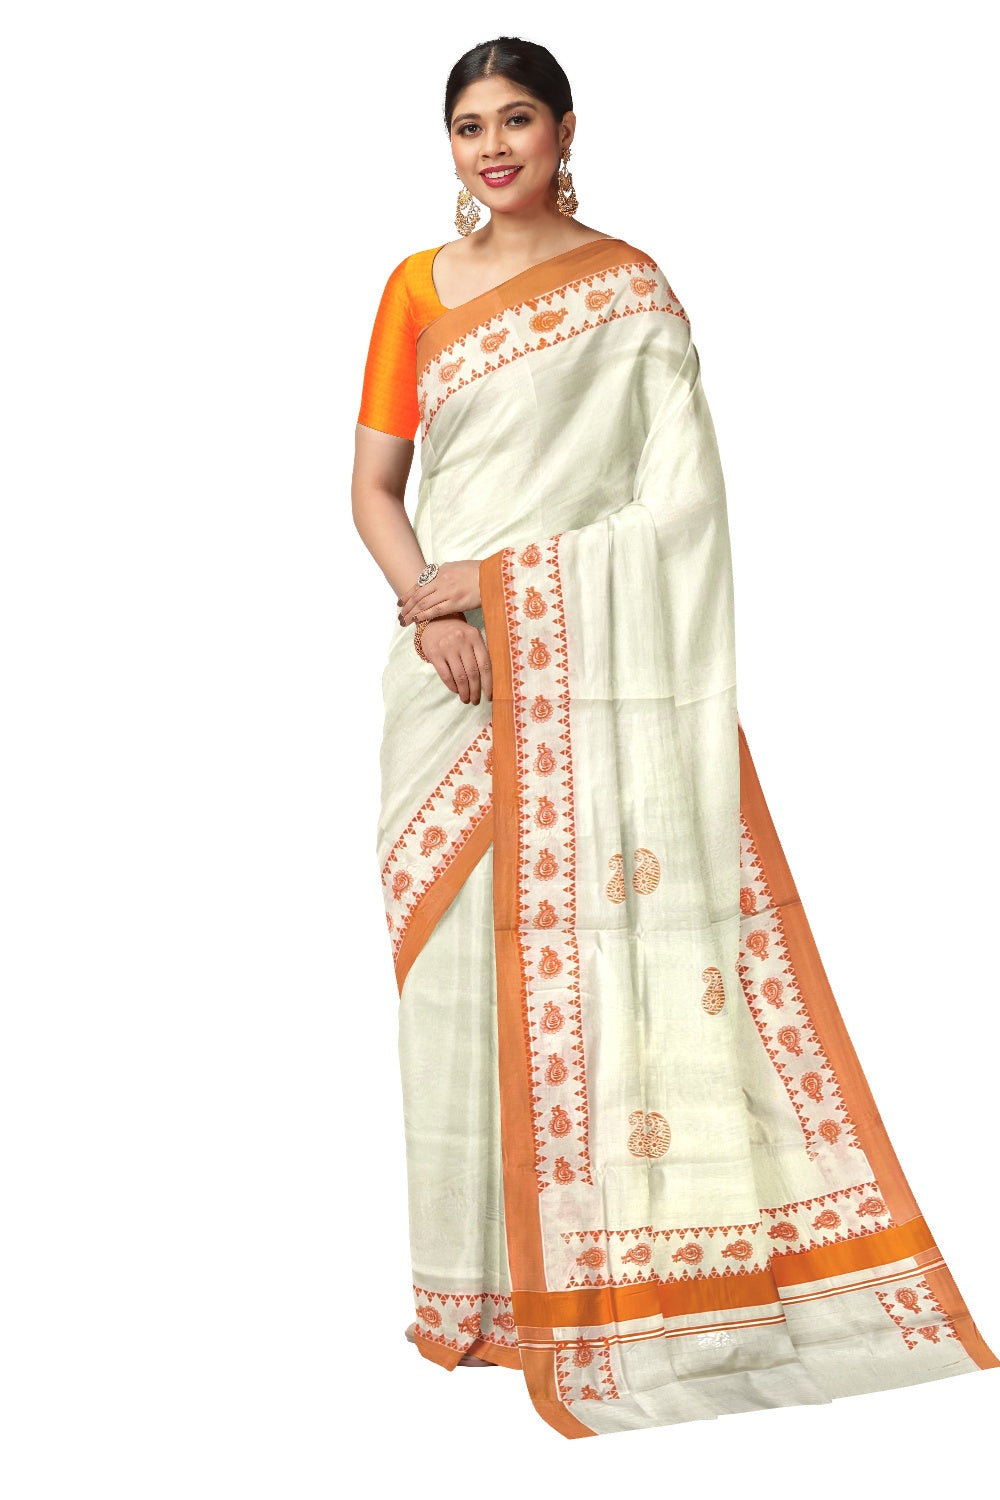 Pure Cotton Kerala Saree with Orange Paisley Block Printed Border